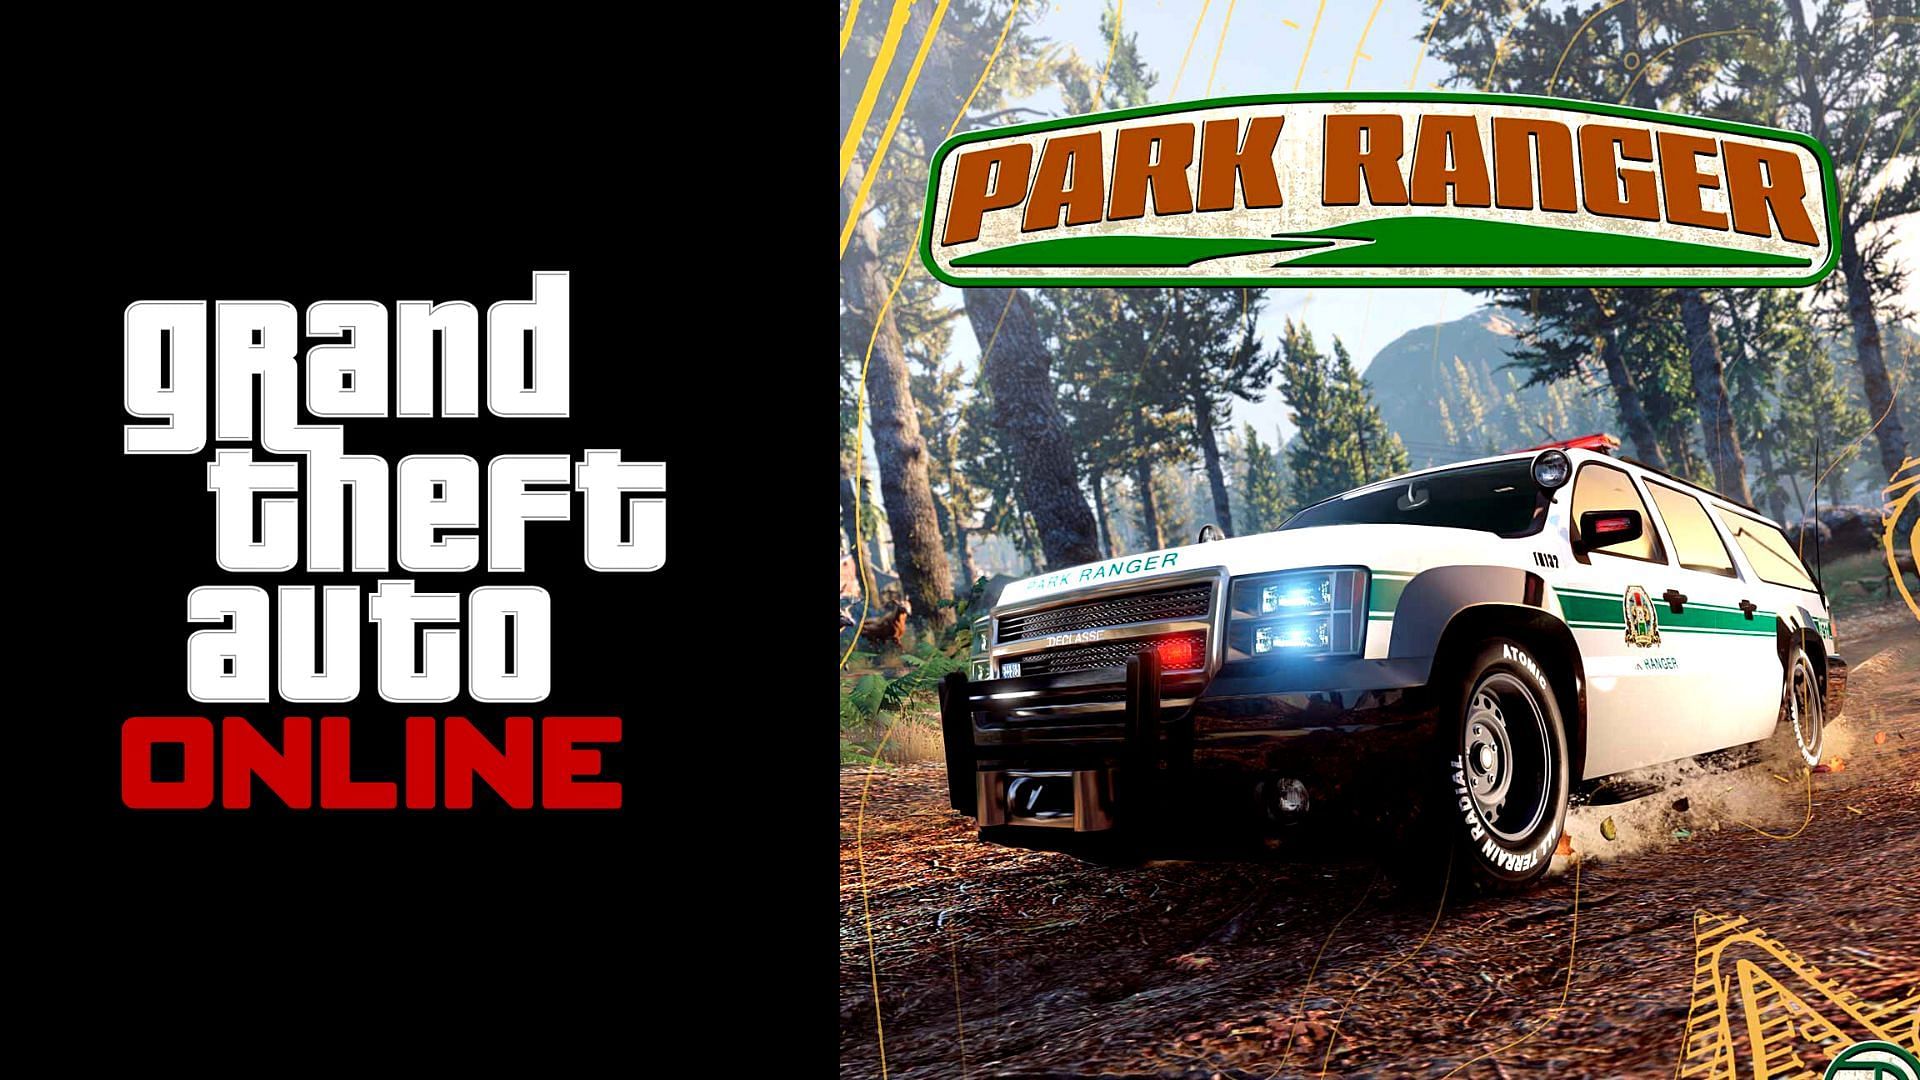 How to get Park Ranger car in GTA 5 Online